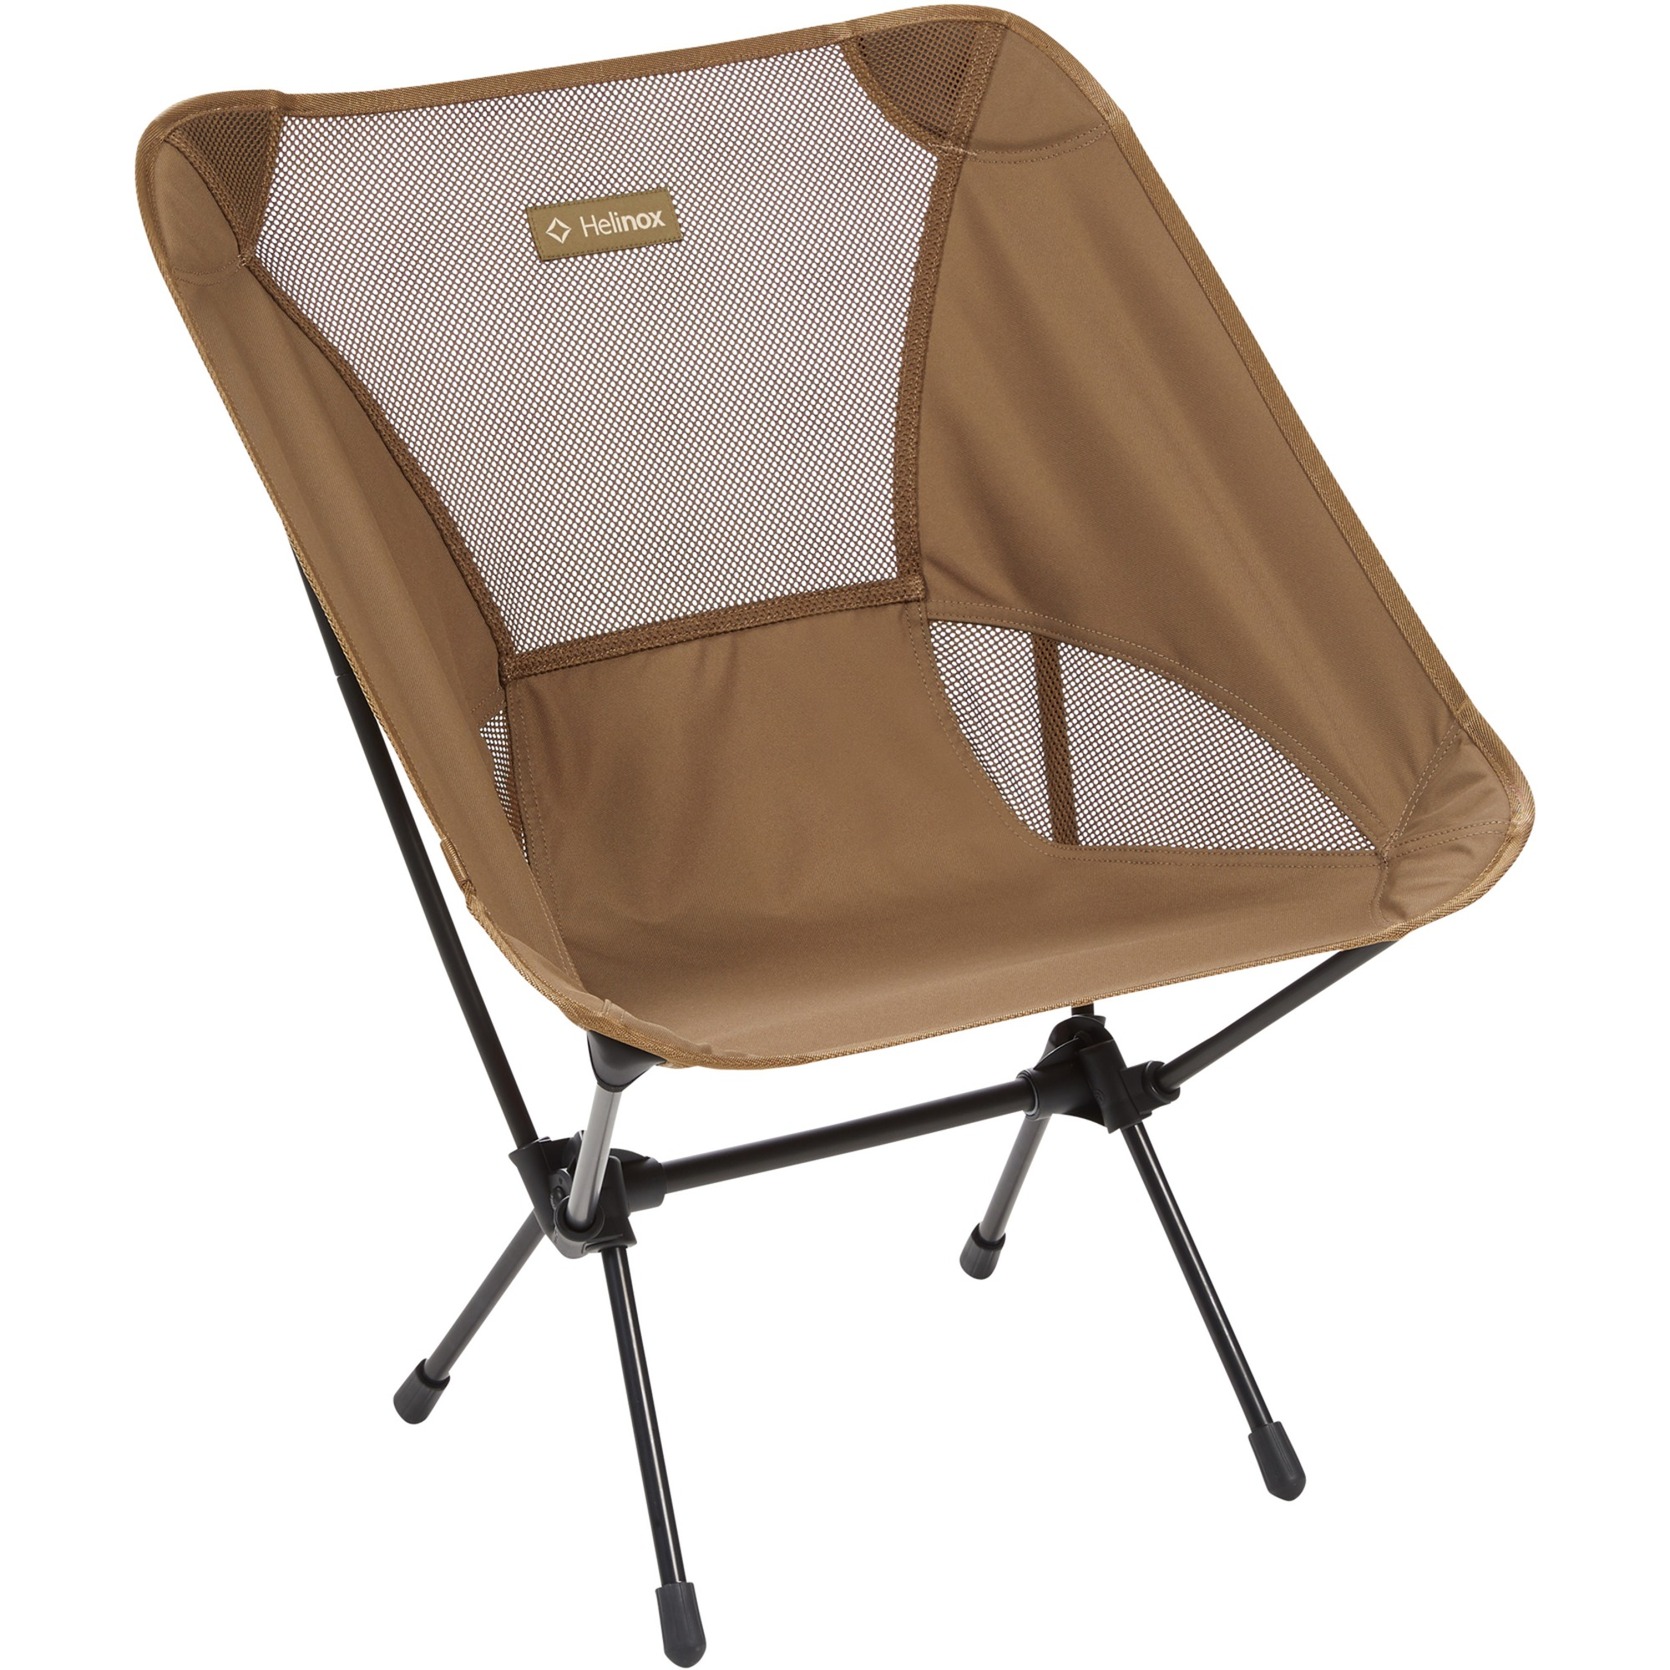 Camping-Stuhl Chair One XL 10079R2 von Helinox